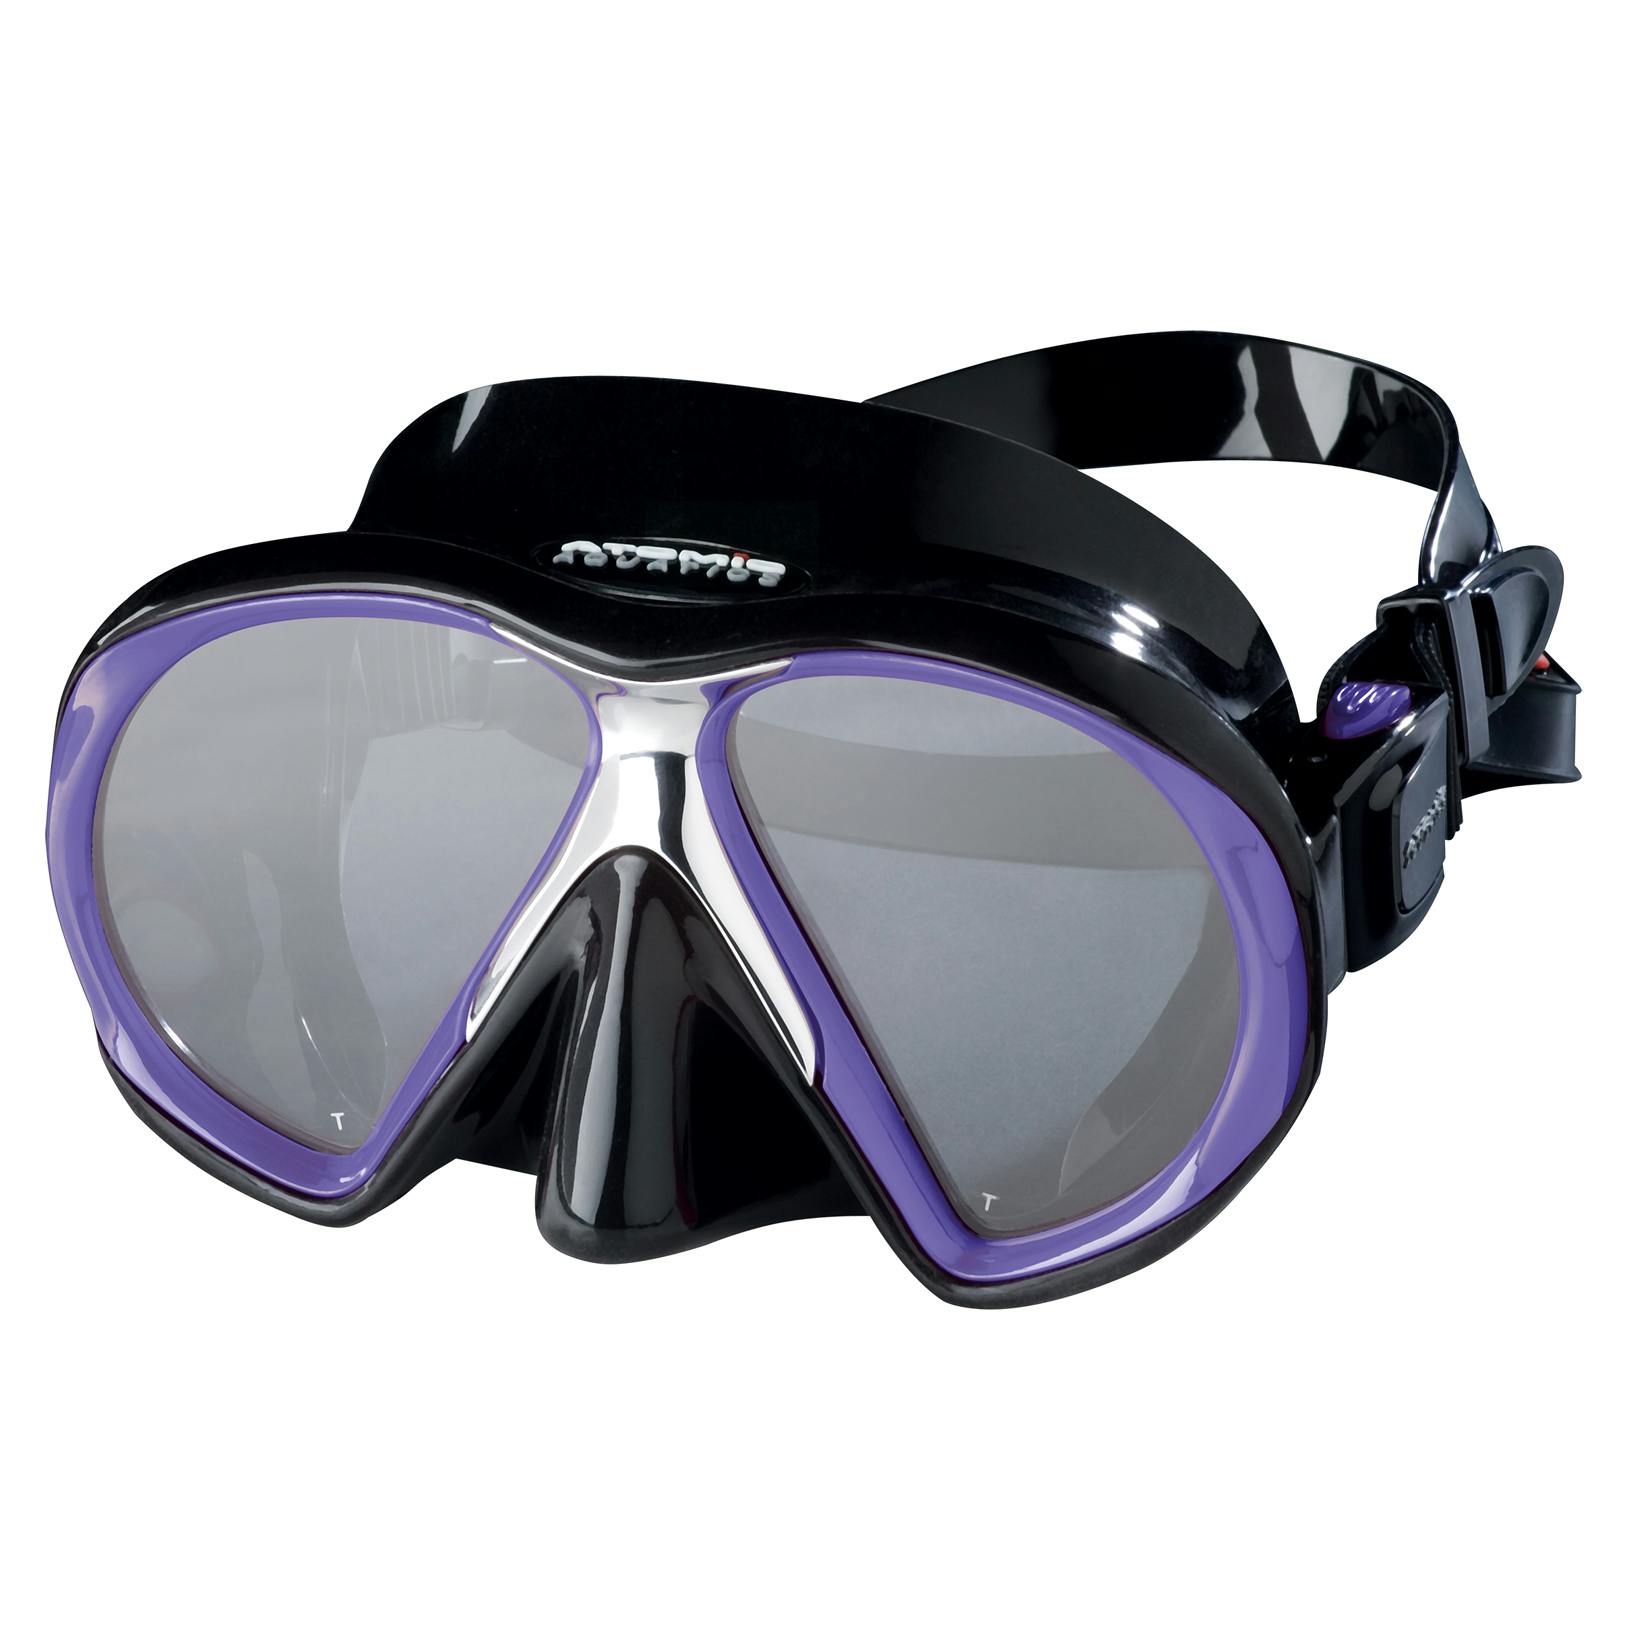 Atomic SubFrame Mask, Two Lens (Regular Fit) - Black/Purple